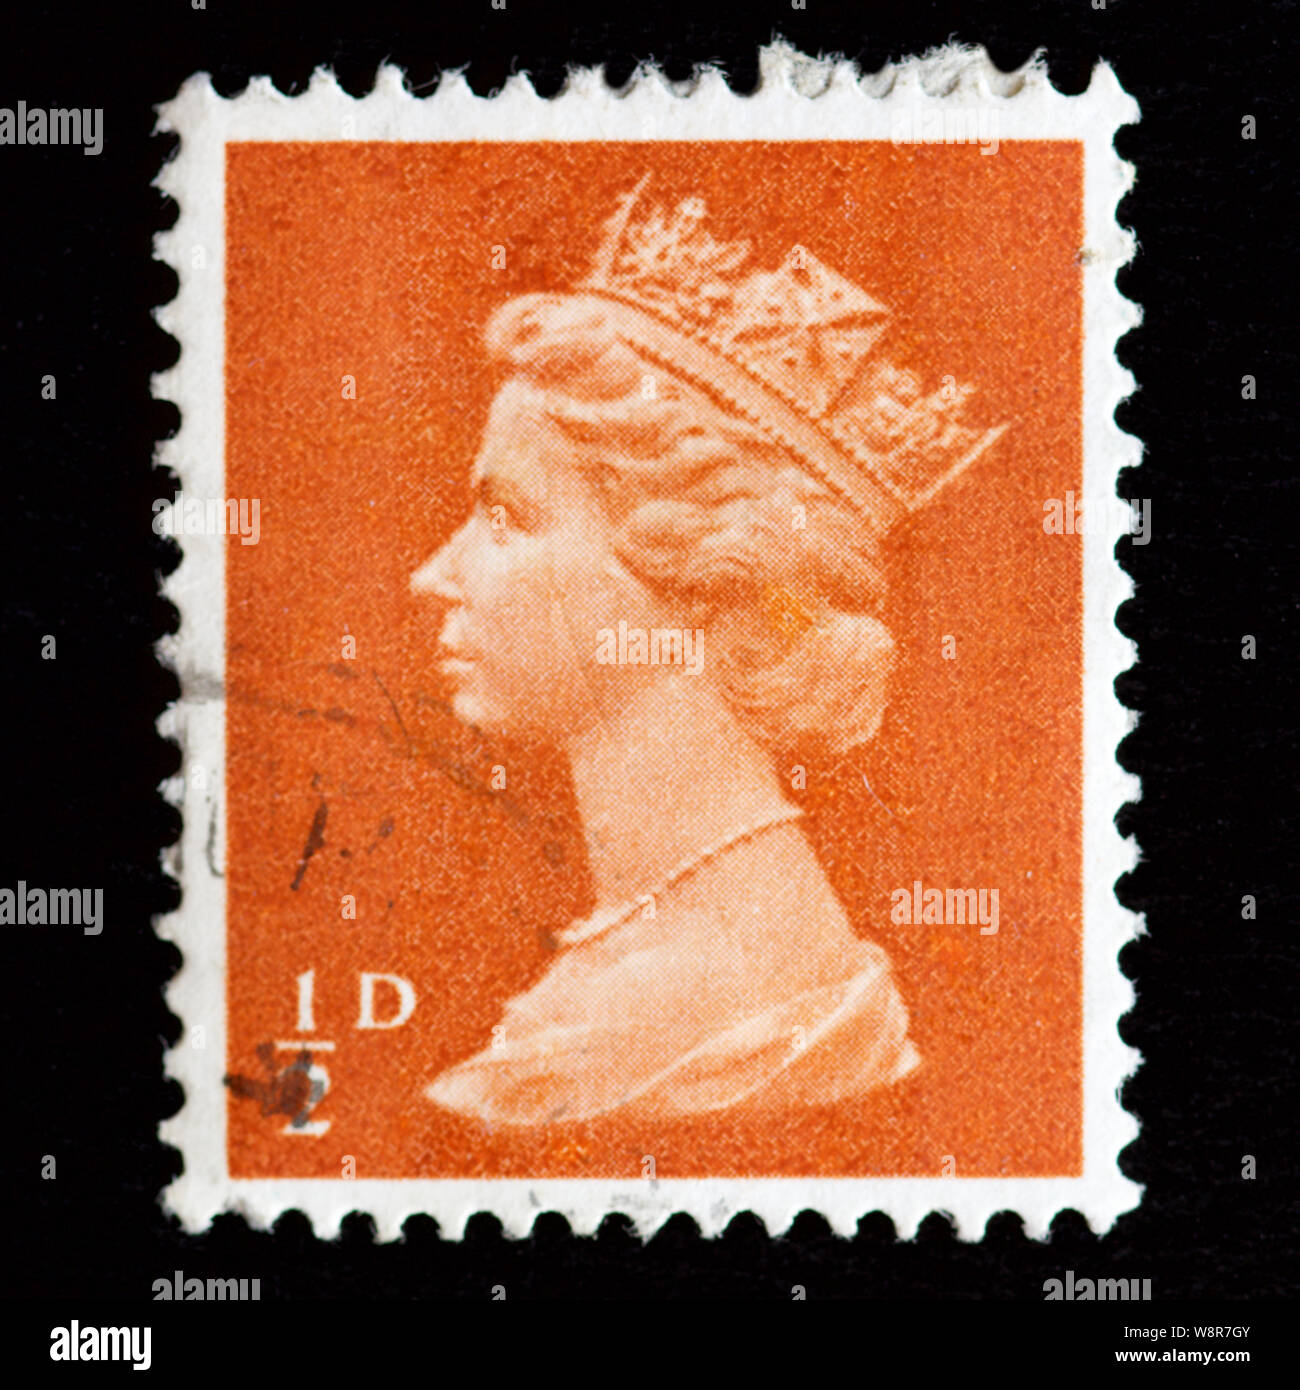  Caemarton Castle 11p Great Britain Postal Stamp : Toys